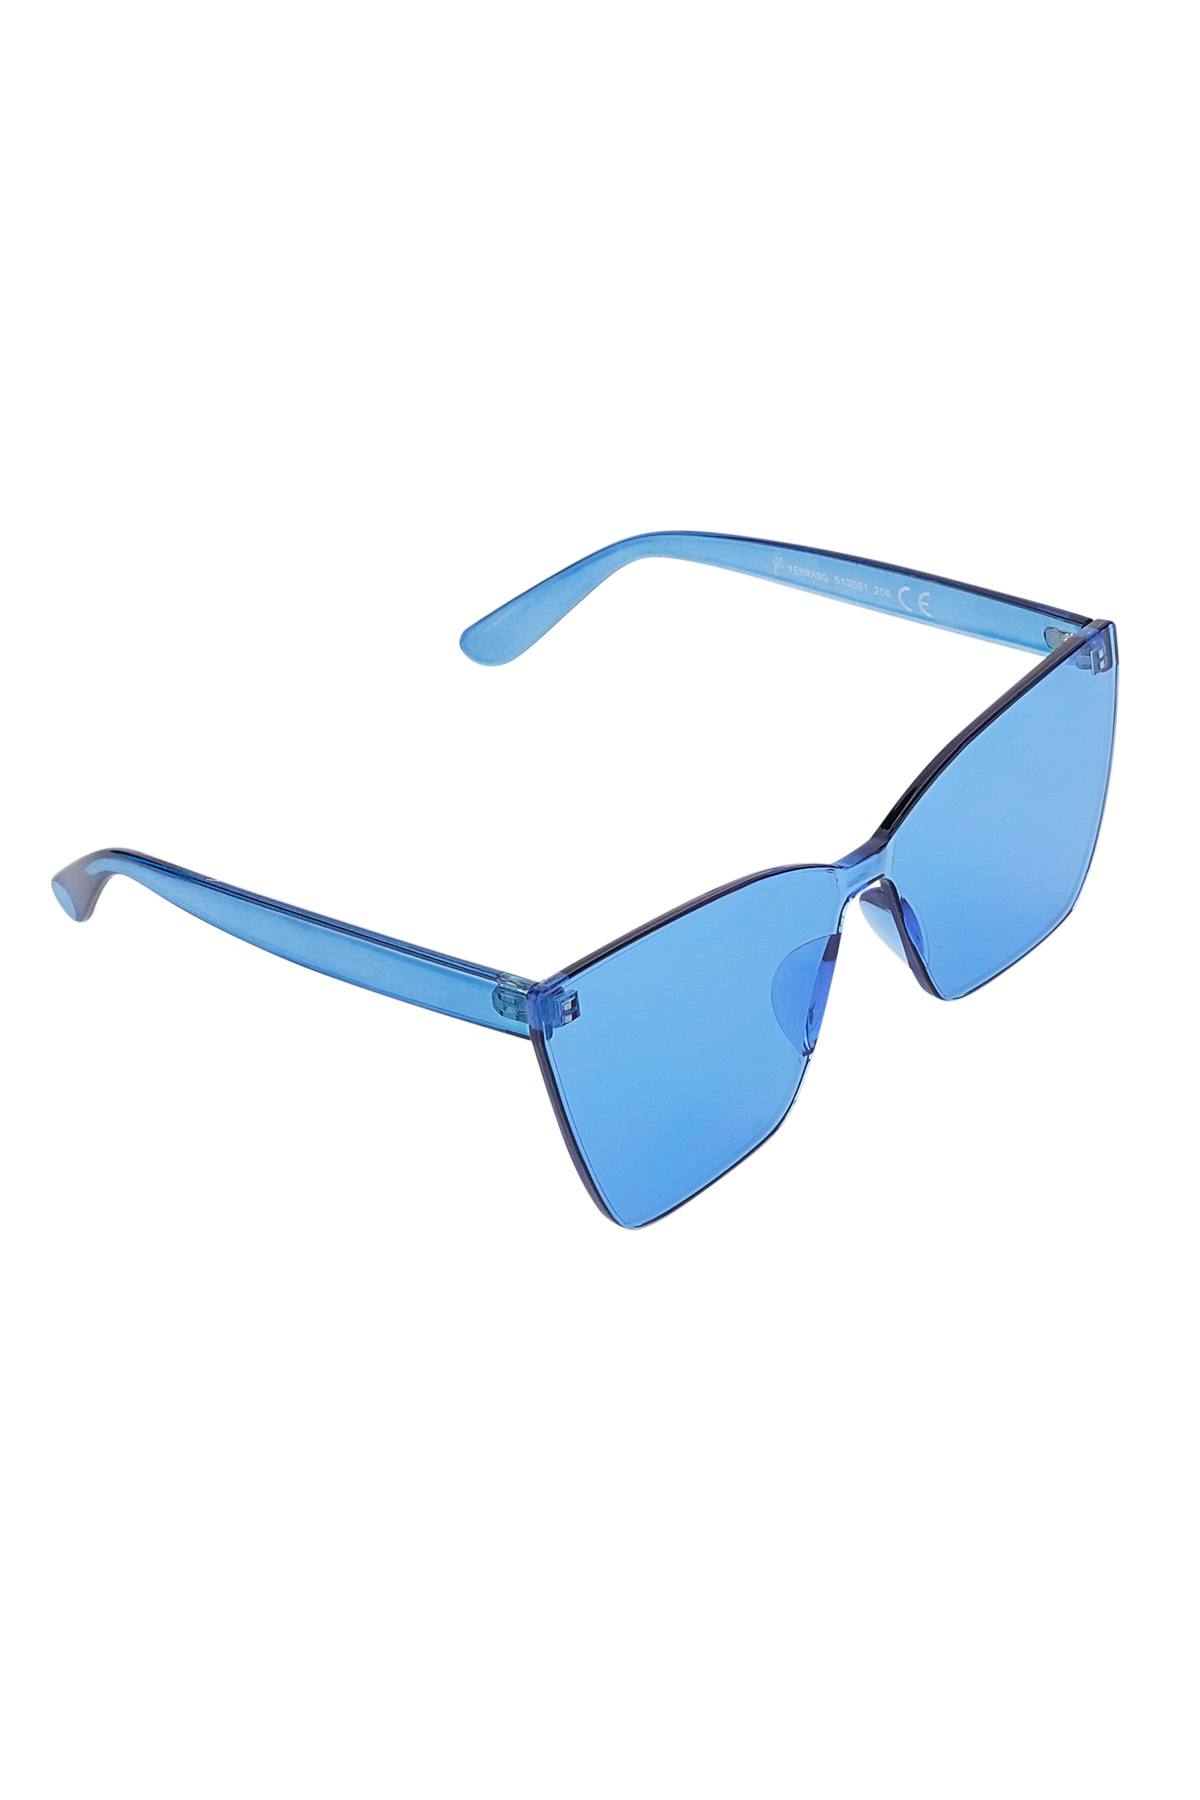 Single-color daily sunglasses - blue